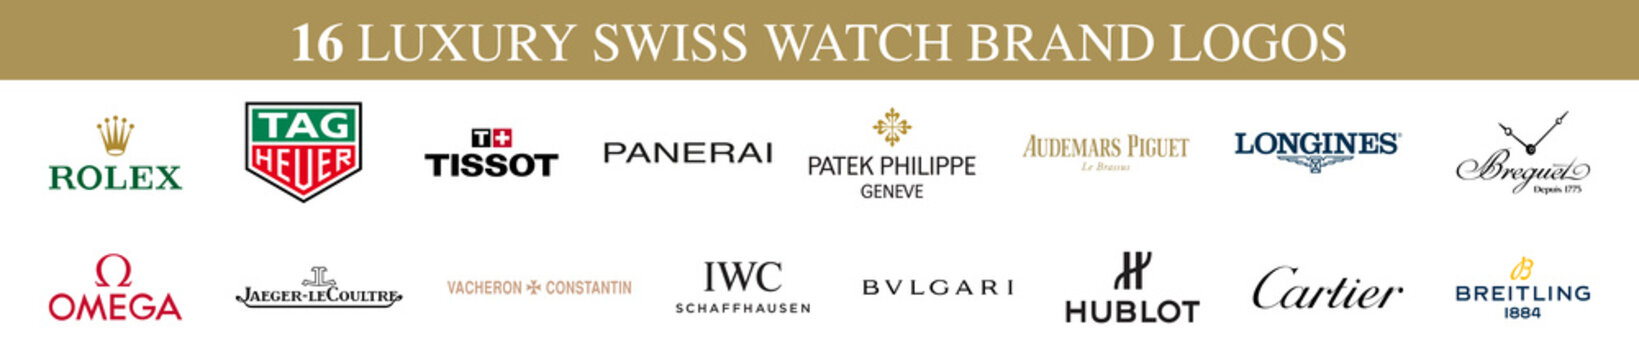 Vector logos of 16 luxury Swiss watch brands. Rolex, Tag Heuer, Tissot, Panerai, Patek Philippe, Audemars Piguet, Longines, Breguet, Omega, Jaeger-LeCoultre, Vacheron Constantin, IWC, Bulgari, etc.